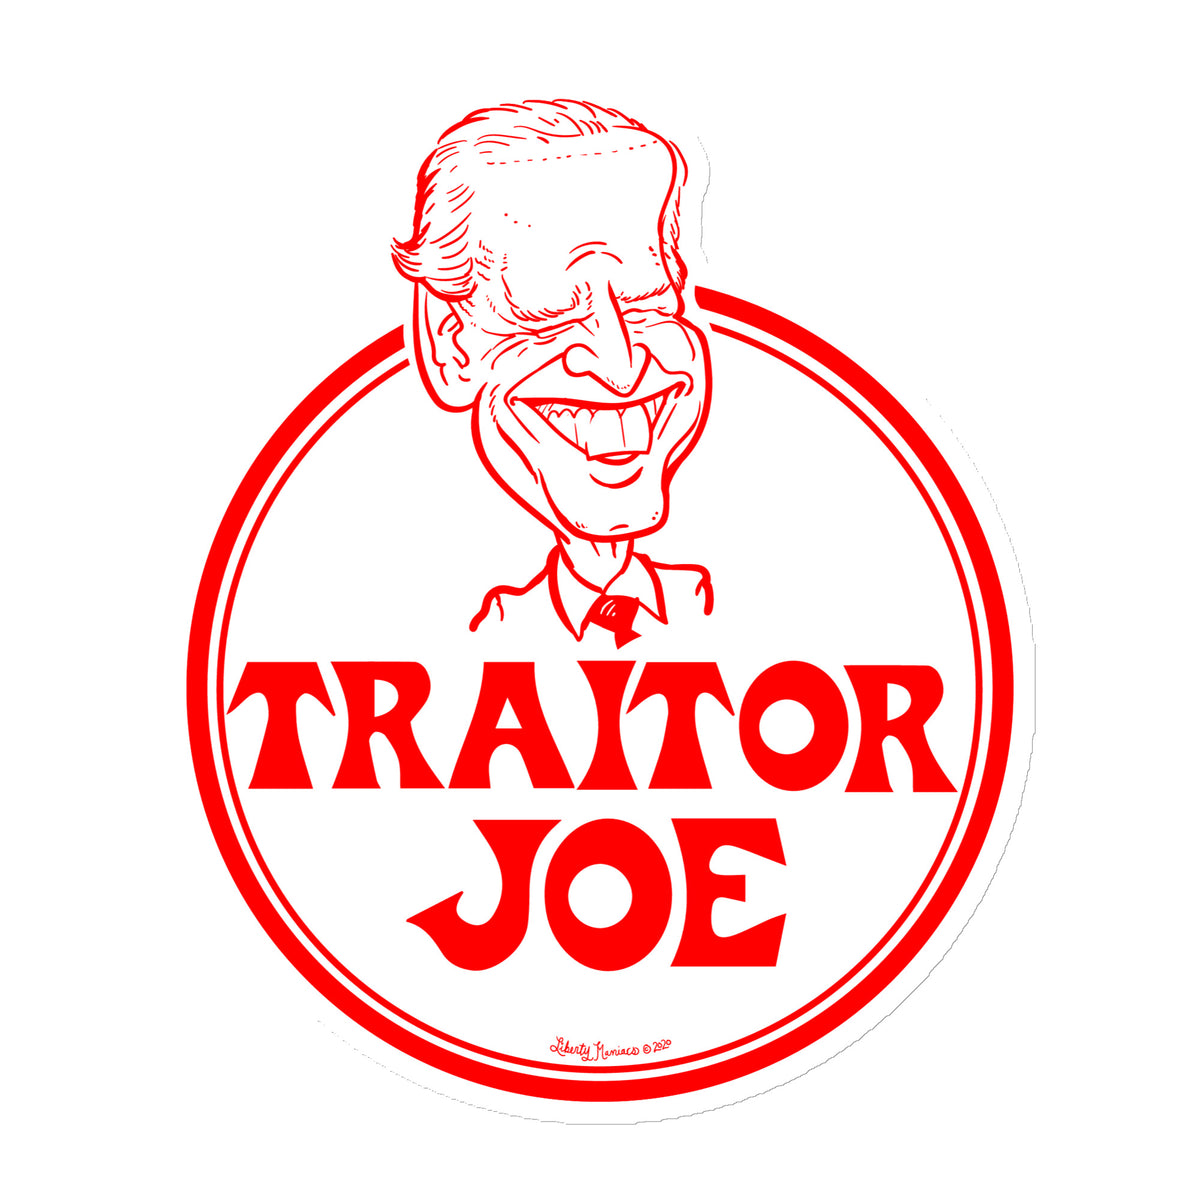 Traitor Joe Magnet